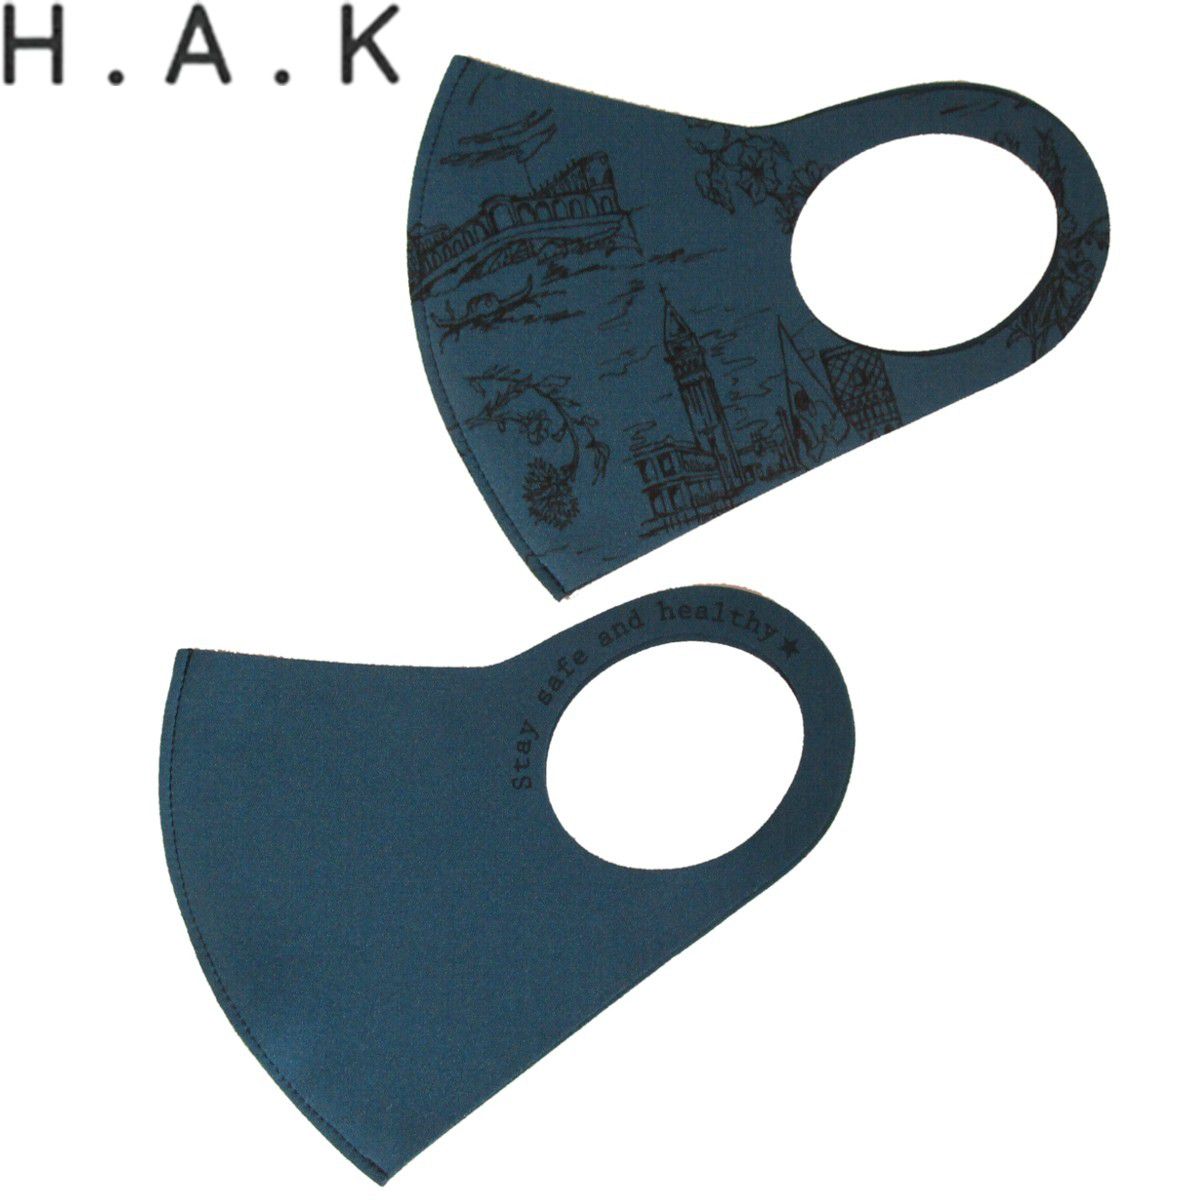 30%OFF SALE(セール) H.A.K(ハク) 洗えるマスク 風景柄&ロゴ立体マスク2枚セット レディース 大人用 全4色 立体マスク ファッションマスク HAKKA ハッカ 日本製 フリーサイズ 春 夏 マスク 花粉症対策